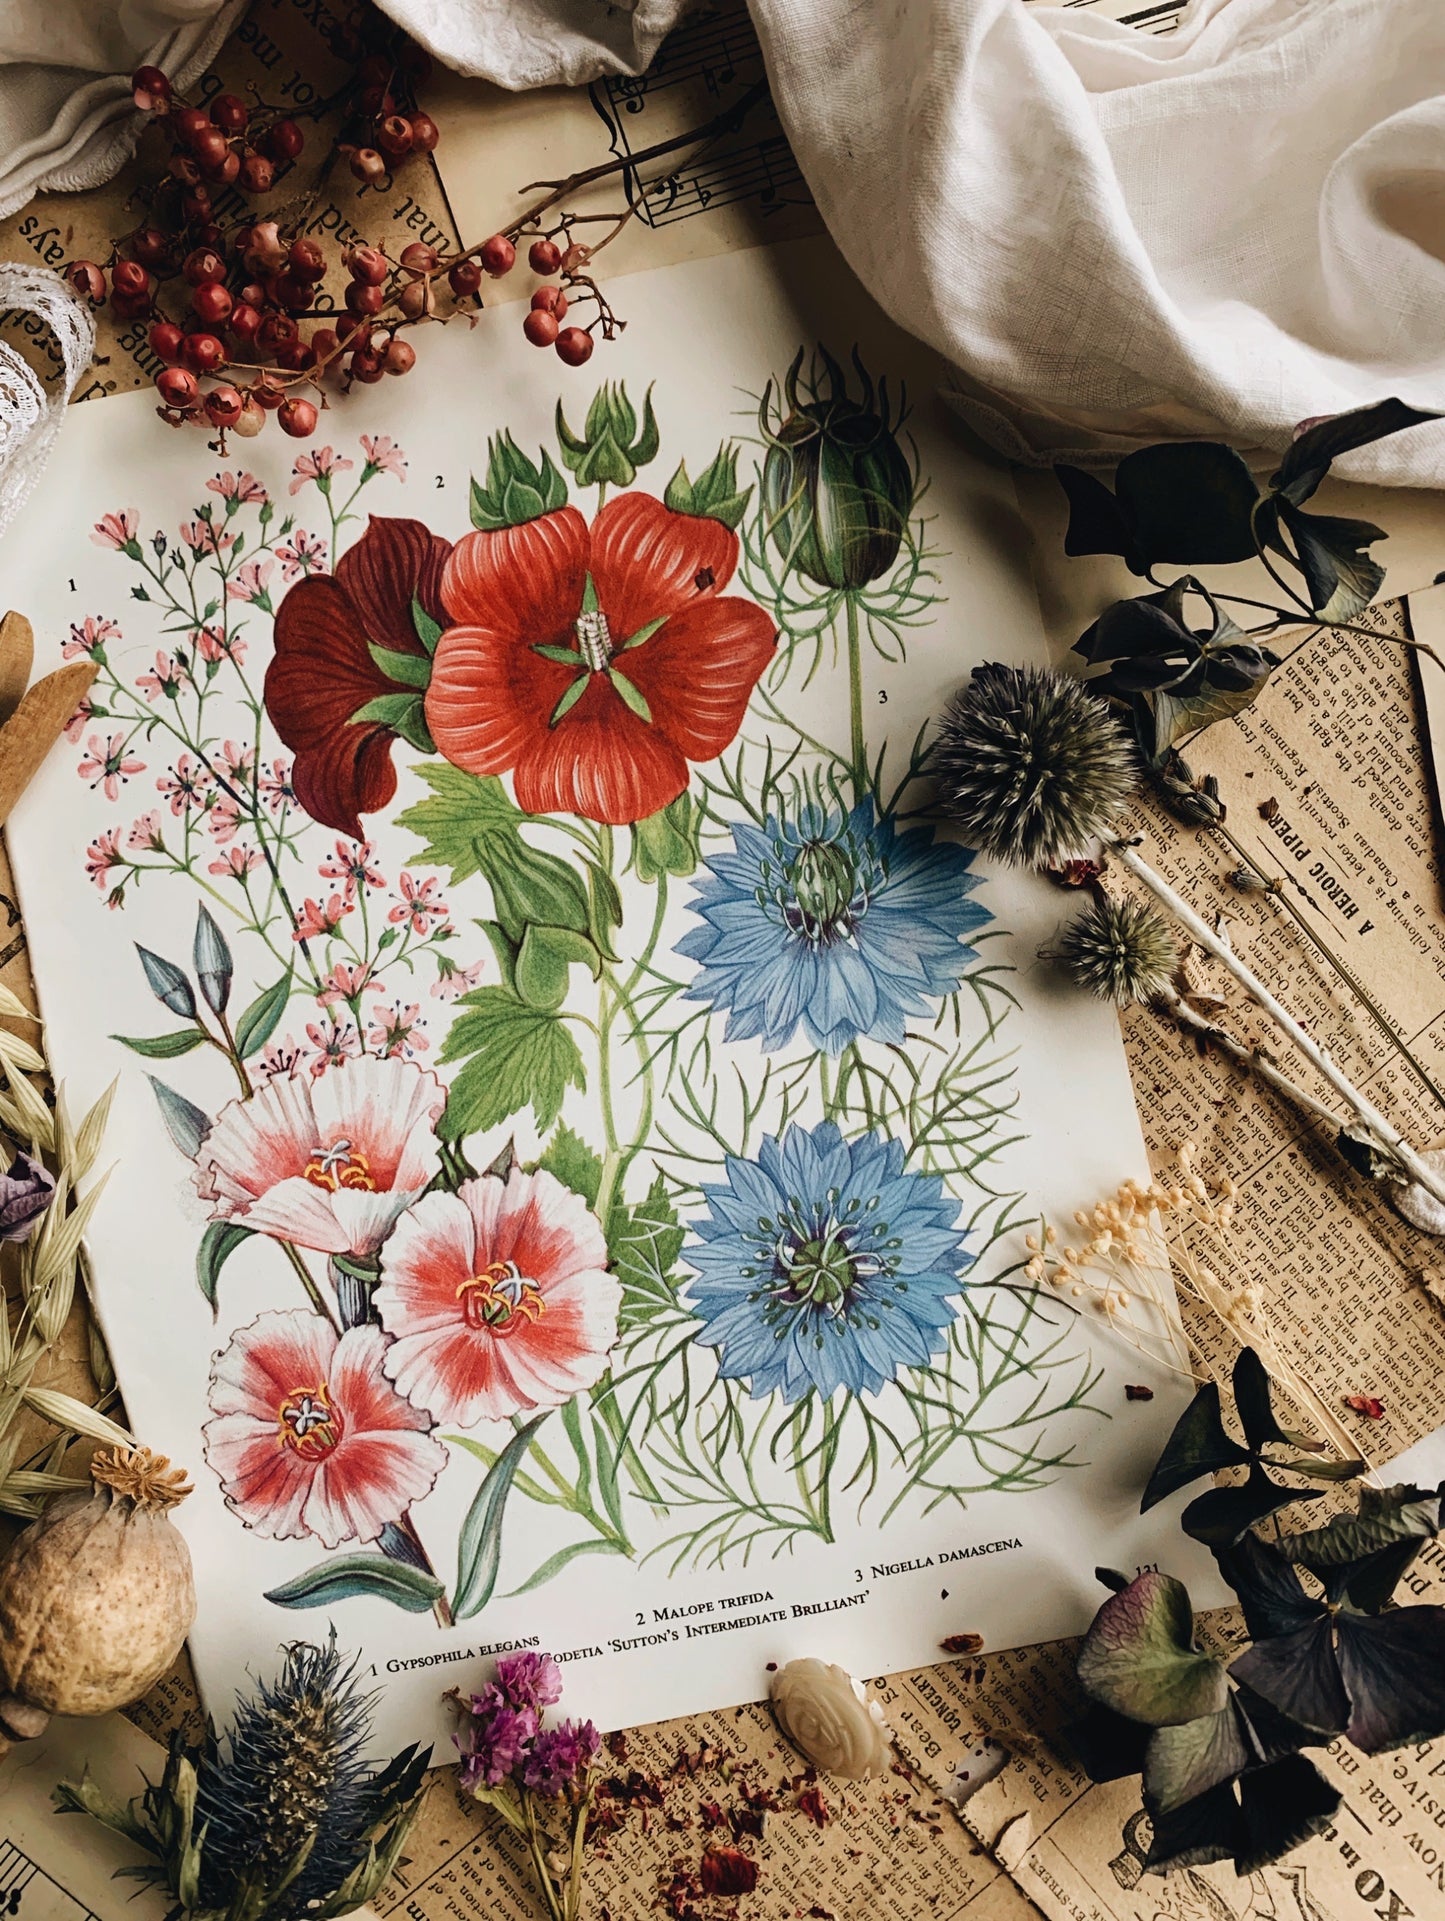 Vintage 1960’s Floral Garden Bookplate ~ Nigella damascena